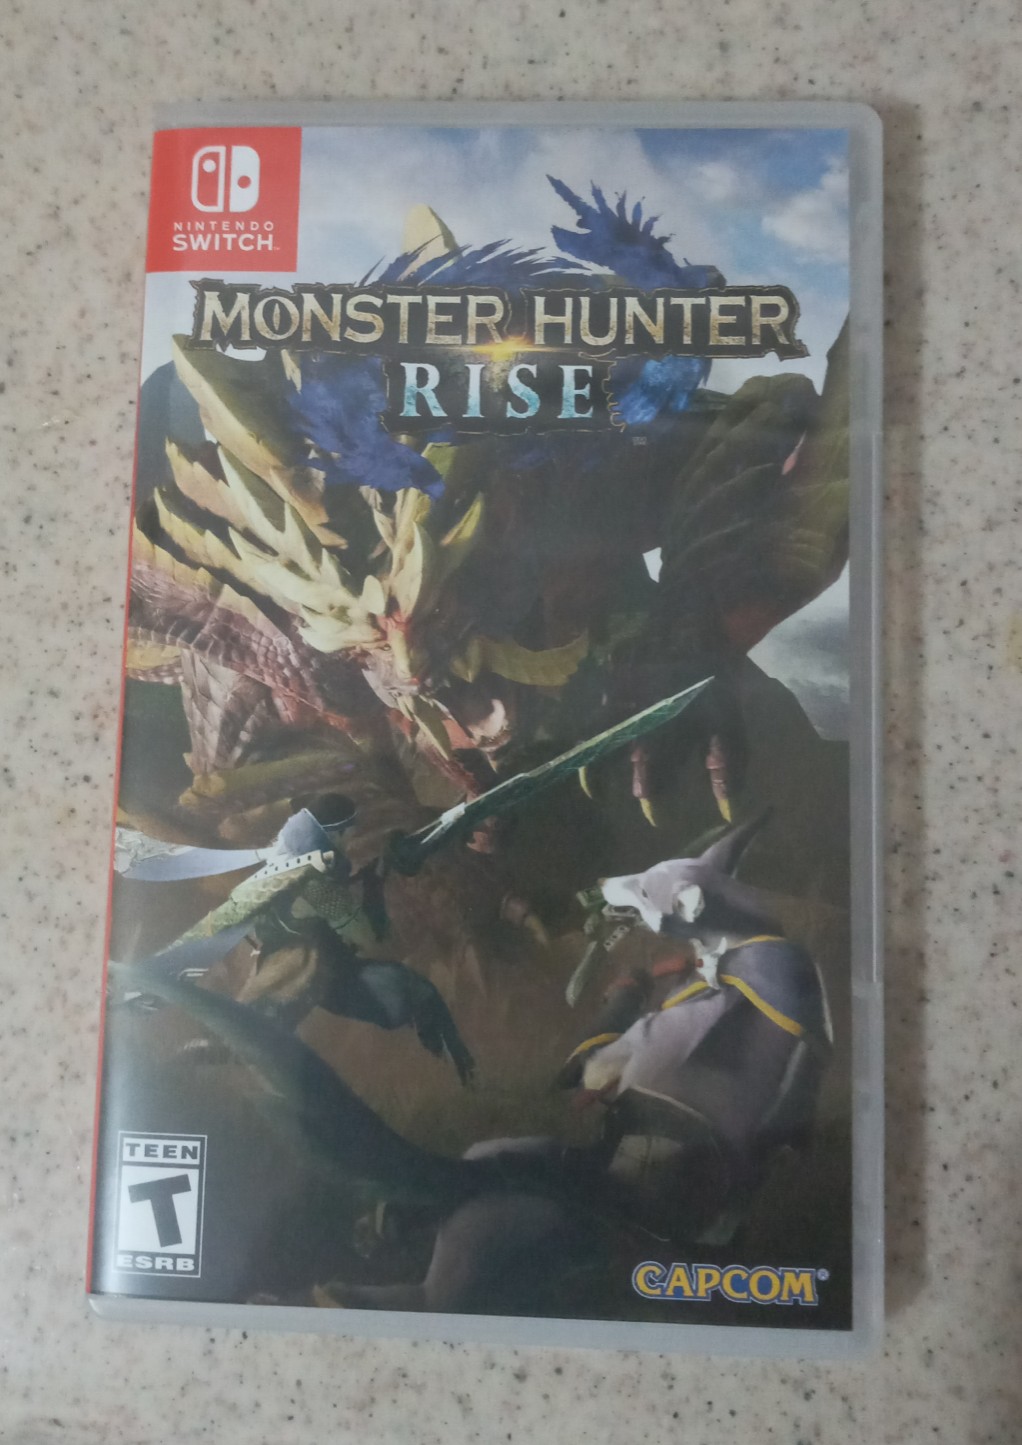 consolas y videojuegos - Monster hunter rise